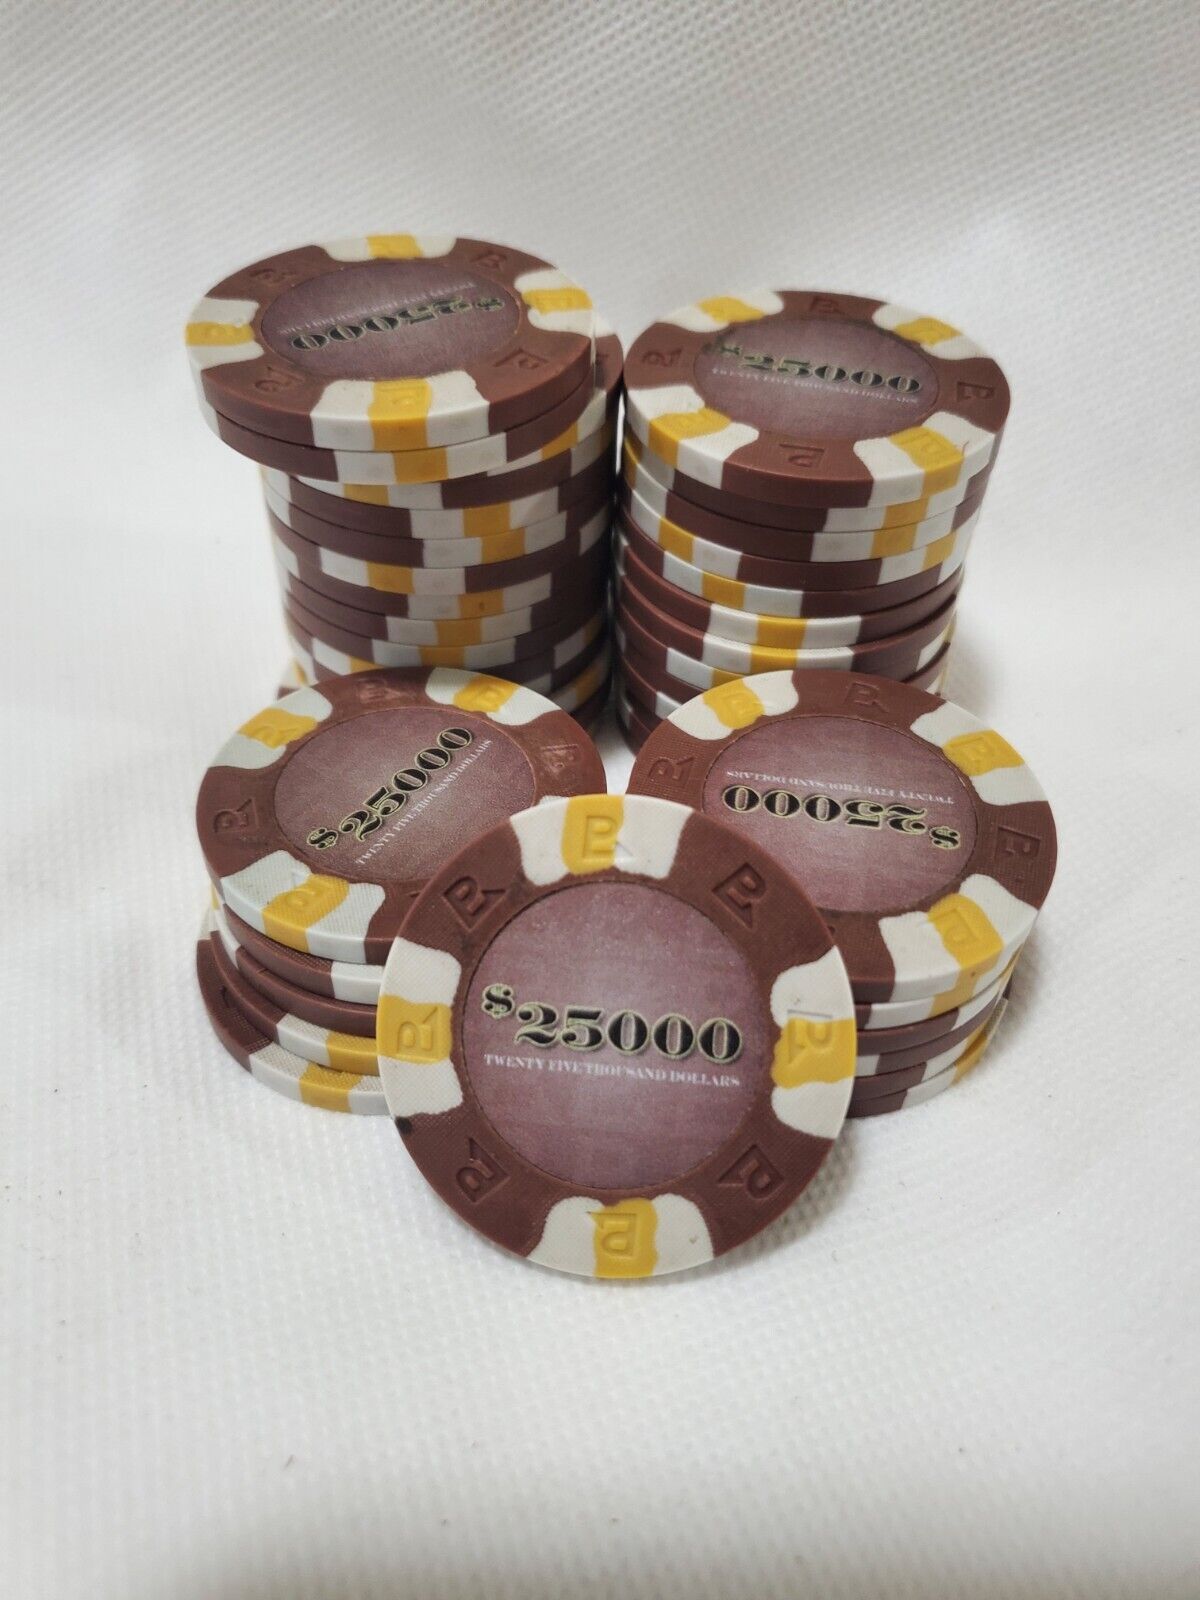 Trademark Poker NexGEN Series PRO Classic Style Poker Chips Brown $25000